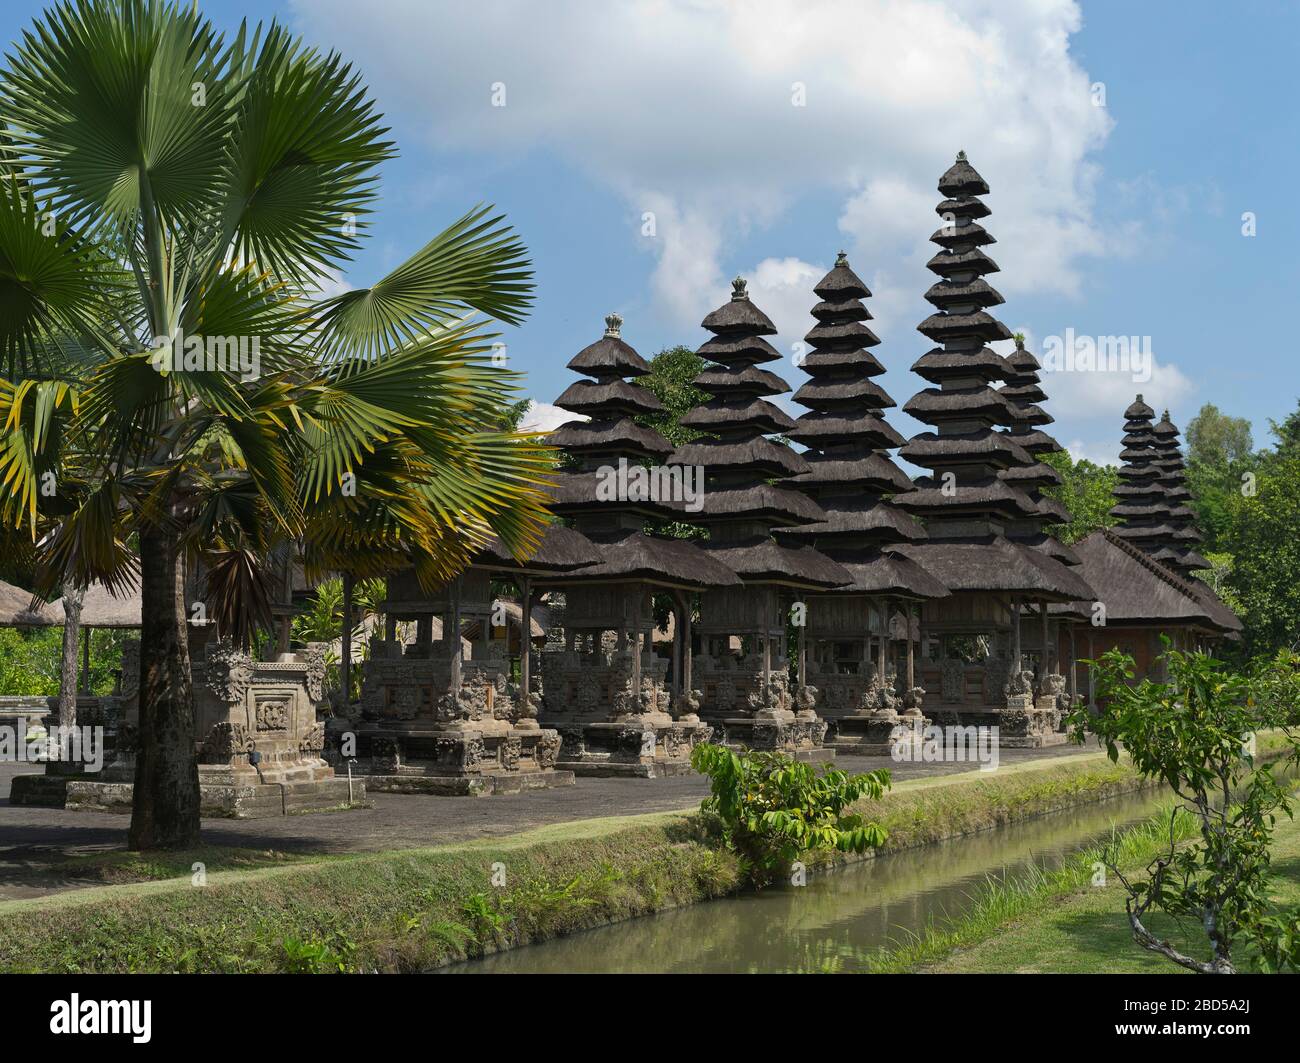 dh Pura Taman Ayun Royal Temple BALI INDONESIA Balinese Hindu Mengwi temples inner sanctum pelinggih meru towers Stock Photo